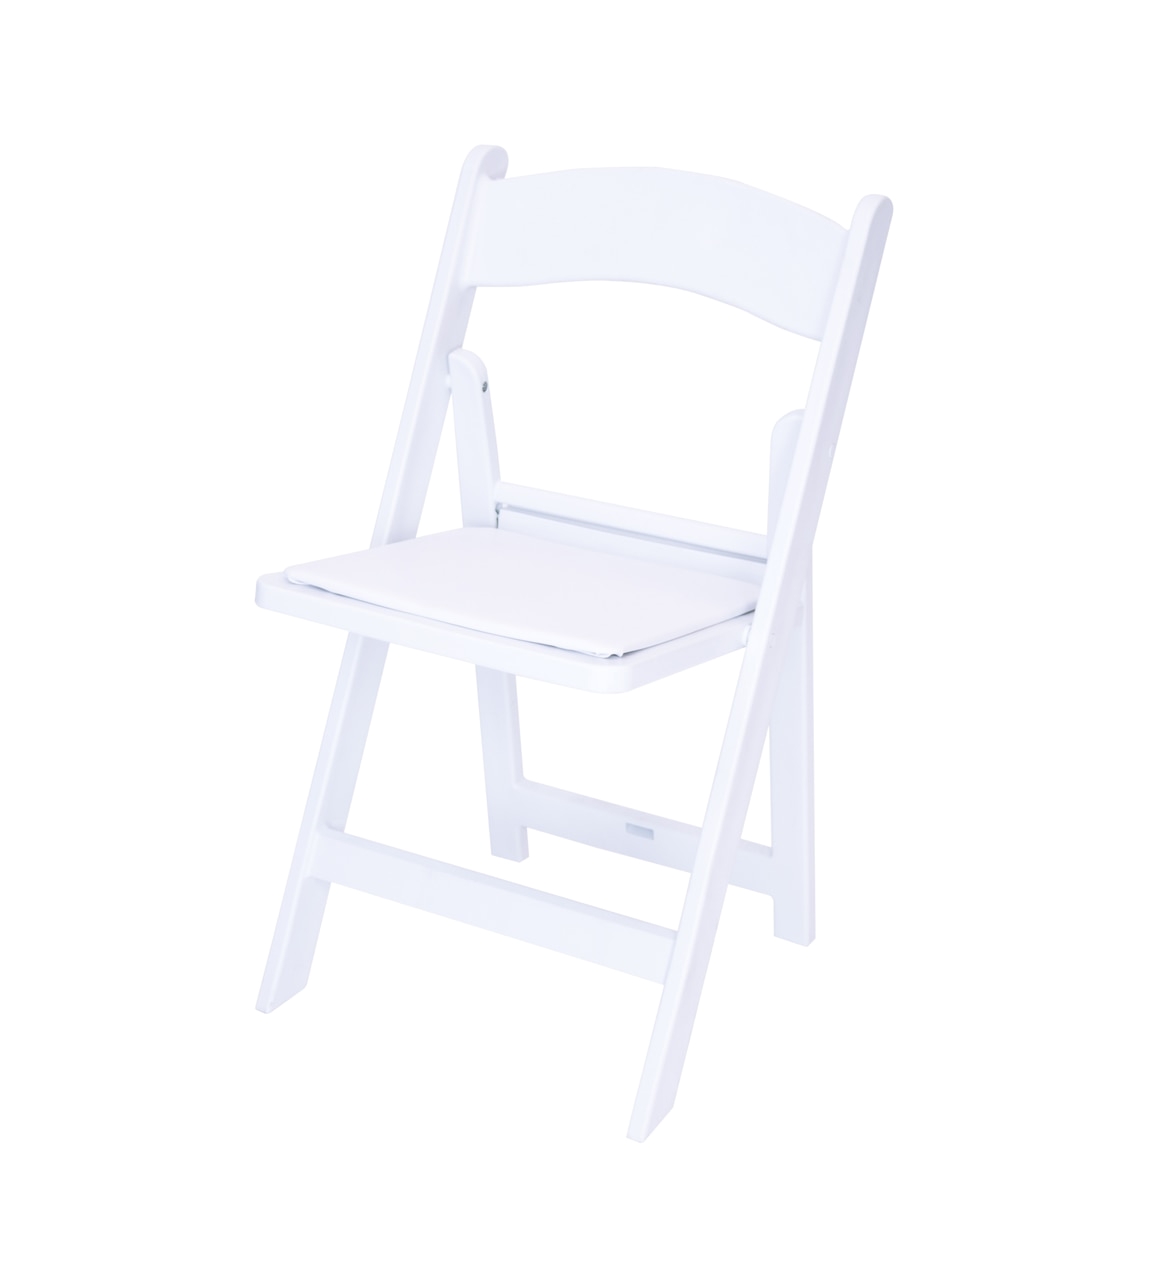 classic series white resin folding chair 1000 lb capacity wedding garden style